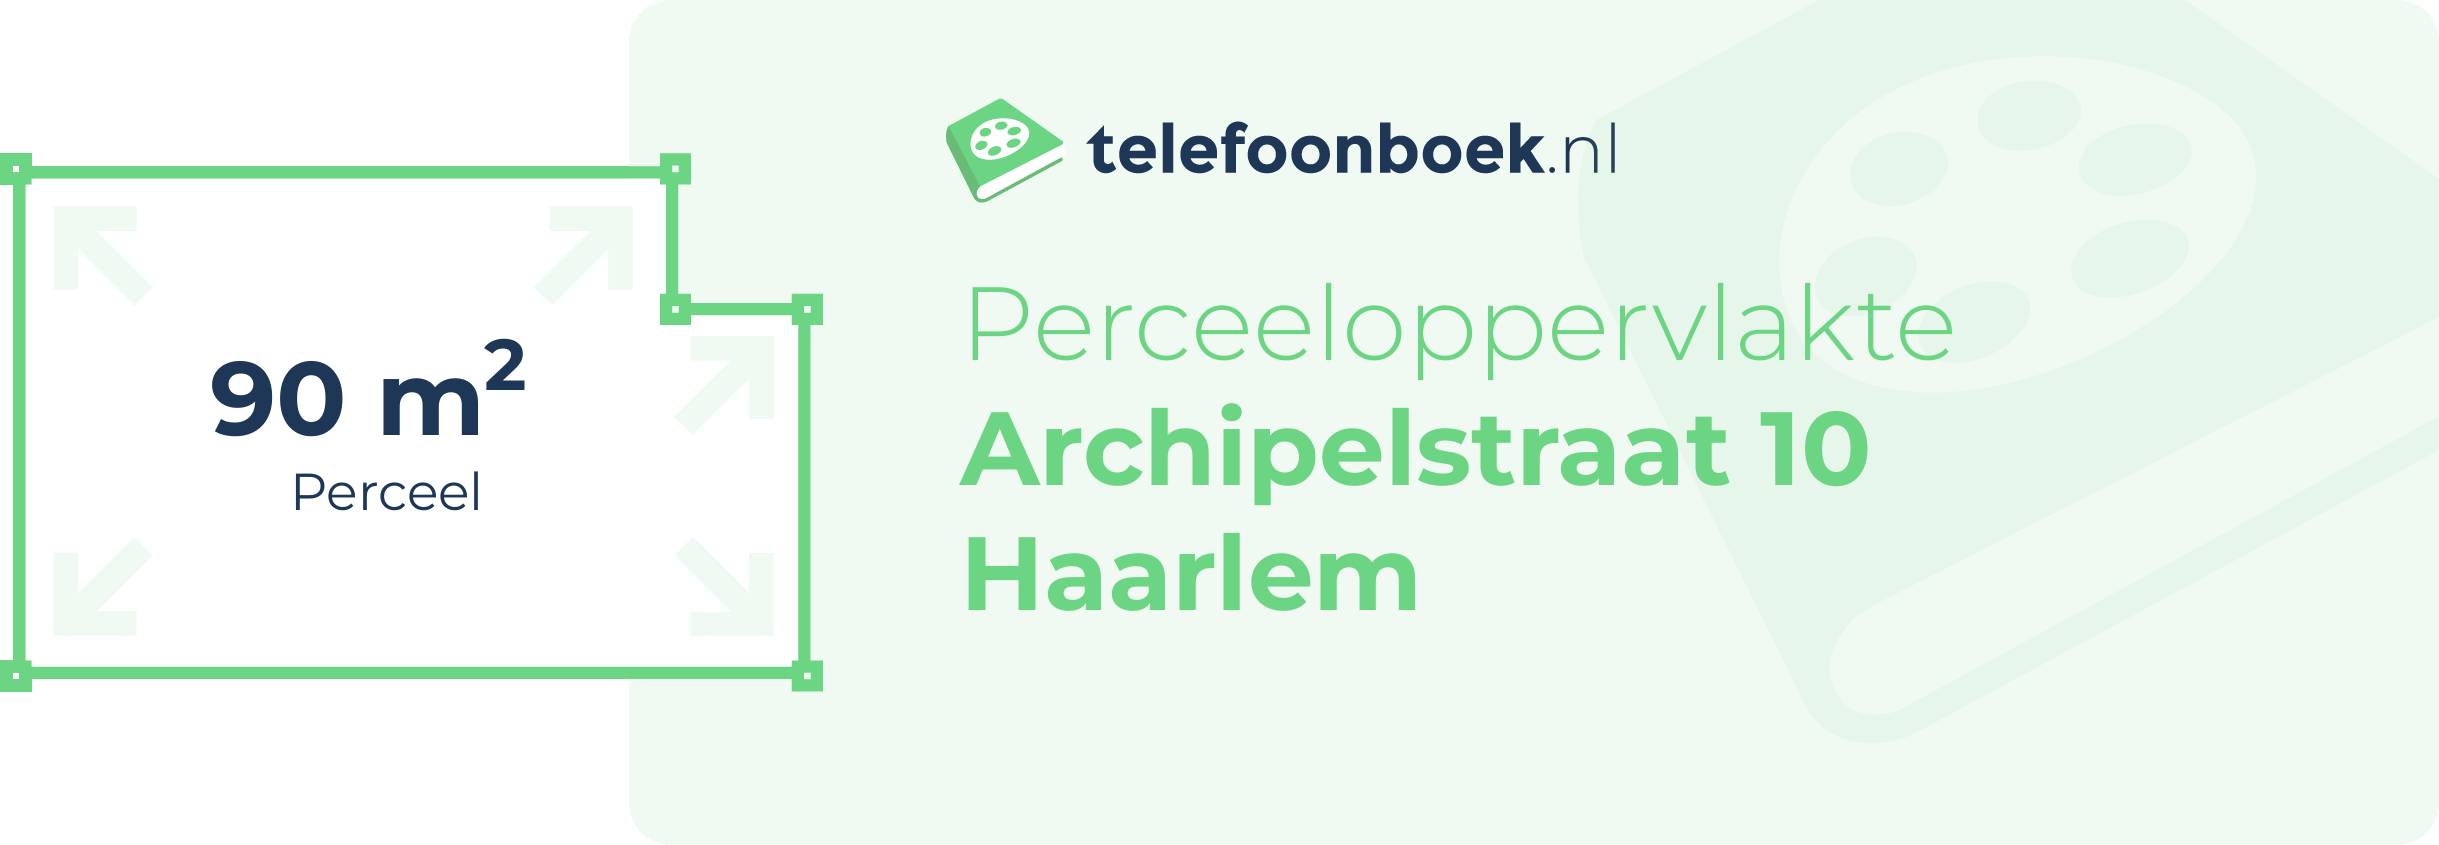 Perceeloppervlakte Archipelstraat 10 Haarlem